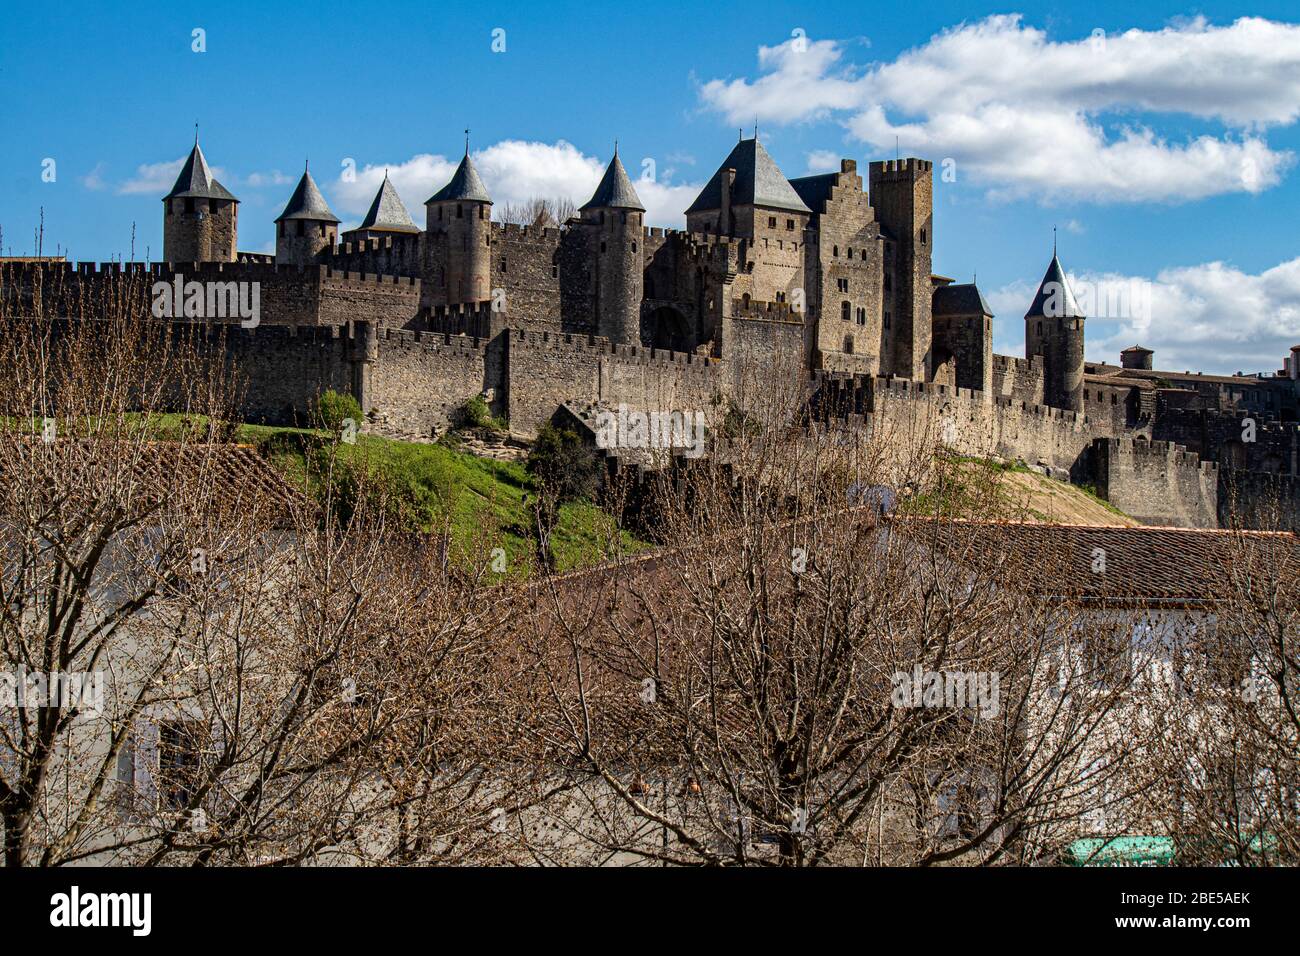 Cite de Carcassonne, Haute Garonne, Frankreich Stockfoto